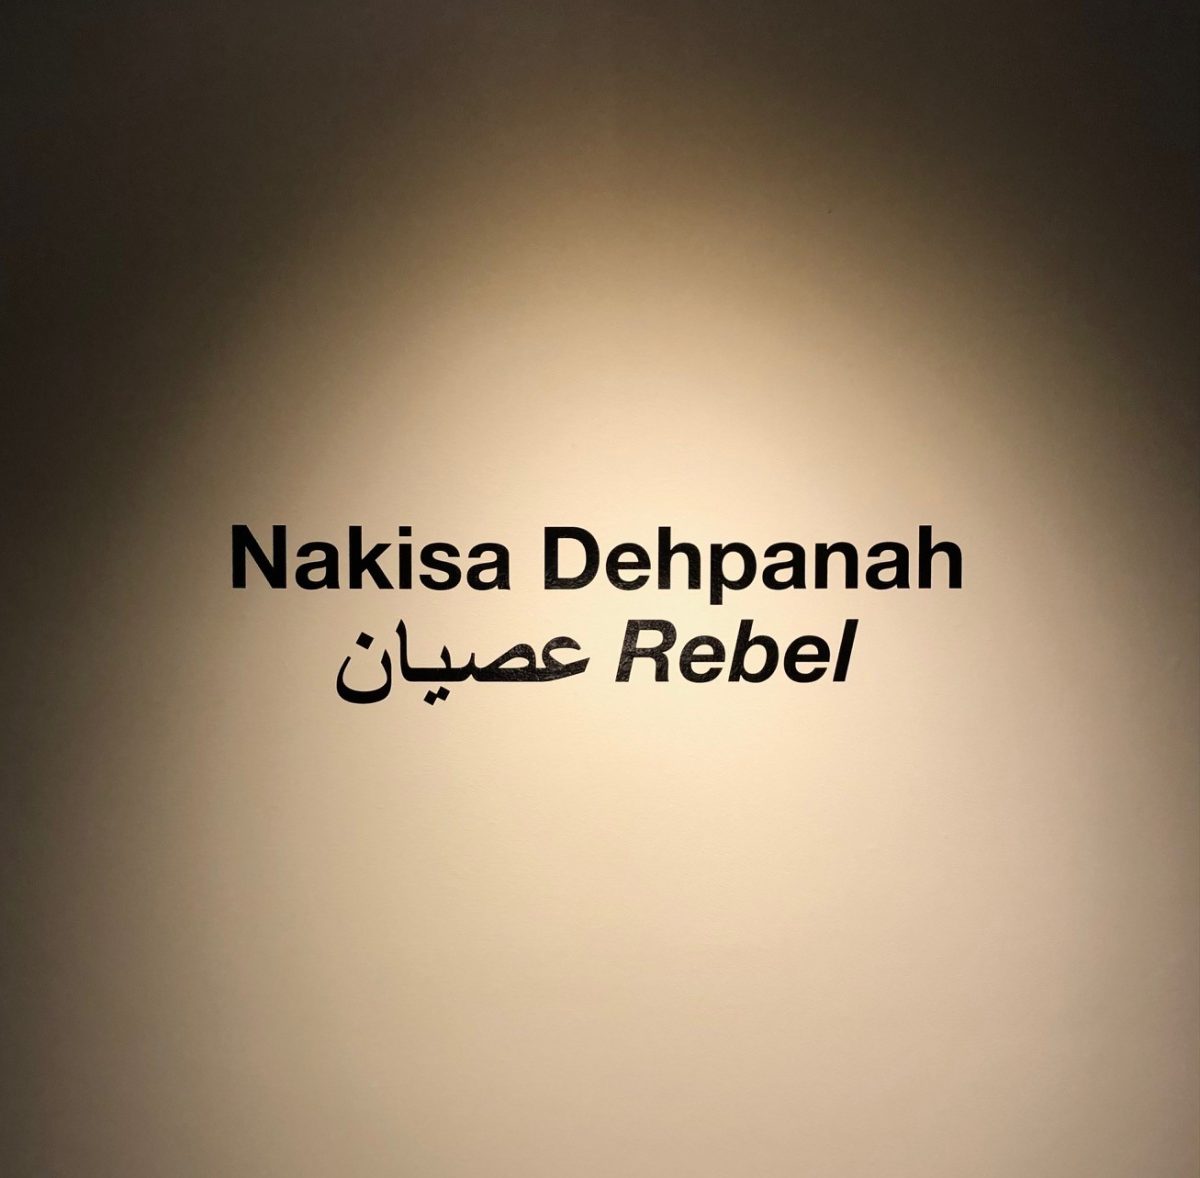 Nakisa+Dehpanahs+art+exhibit+Rebel.++